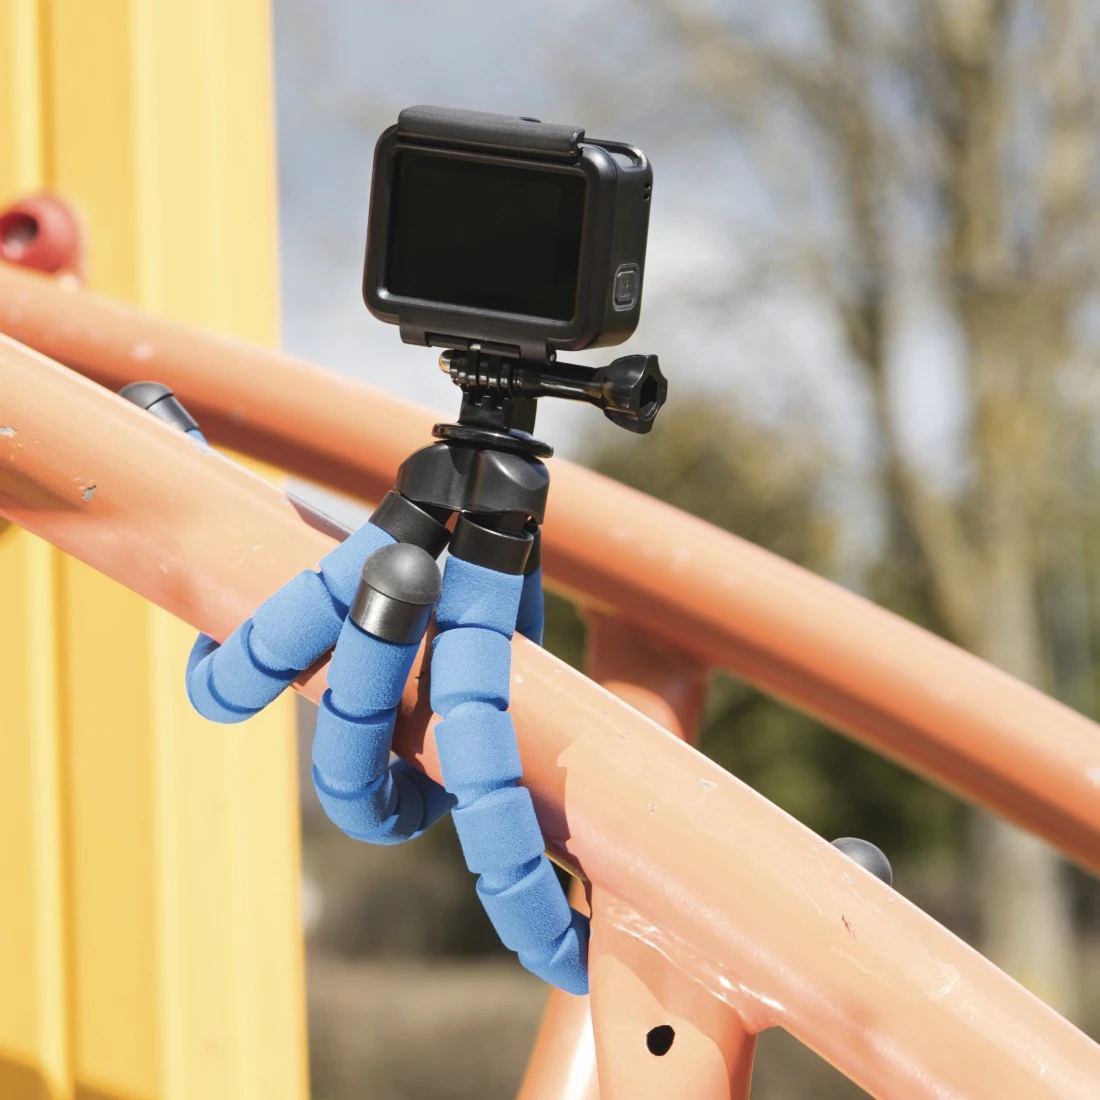 Hama Flex Tripod for Smartphone and GoPro 26cm Blue - Foto Erhardt